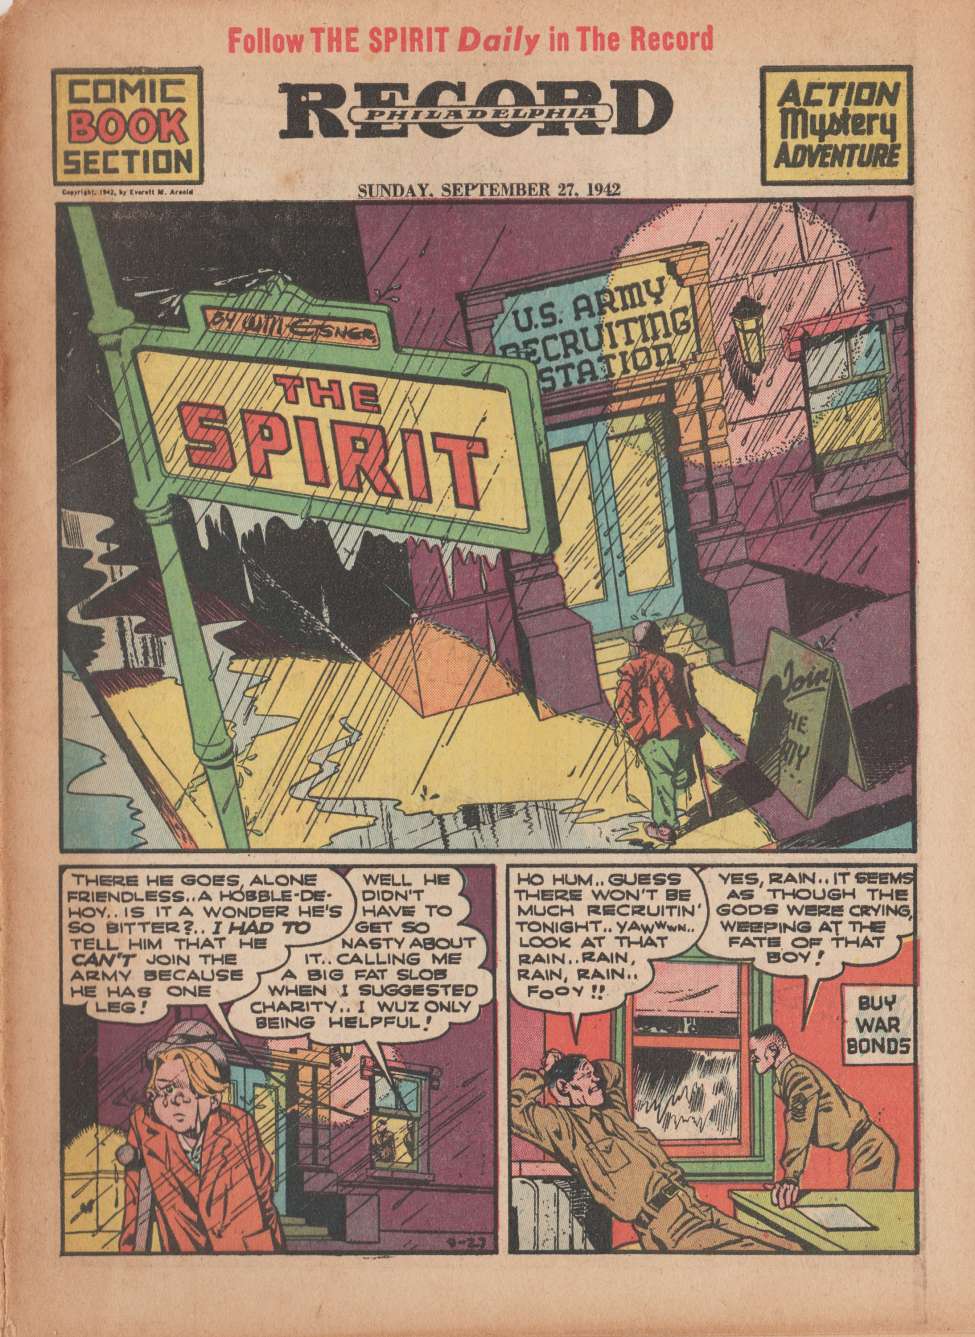 Comic Book Cover For The Spirit (1942-09-27) - Philadelphia Record